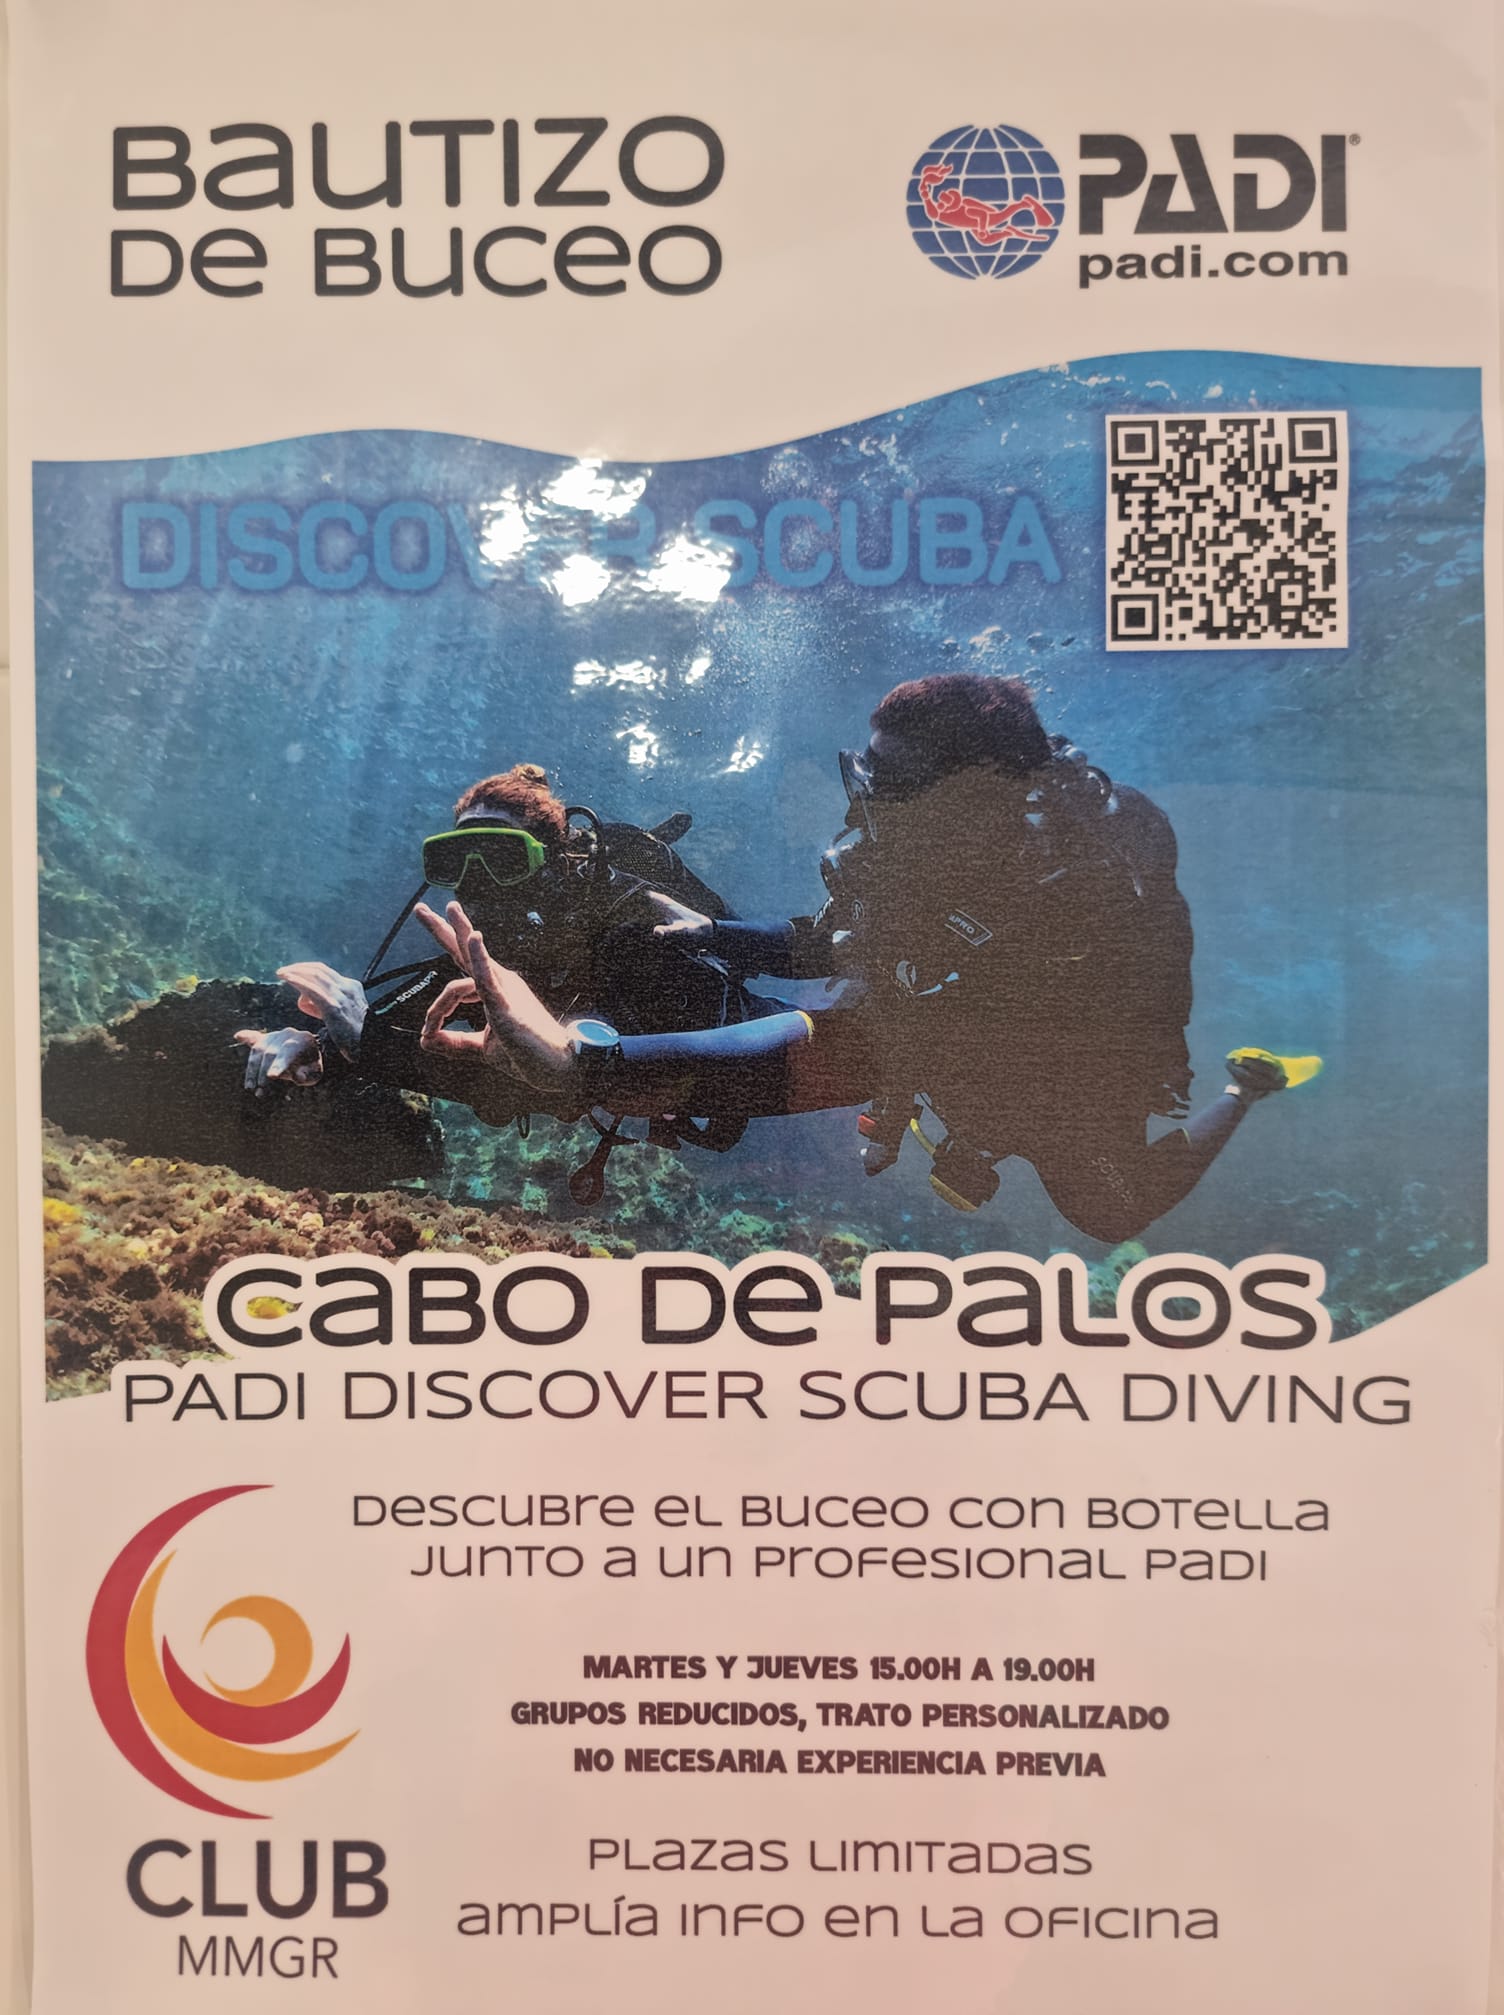 Scuba diving snorkelling water sports Murcia Costa Calida tourism